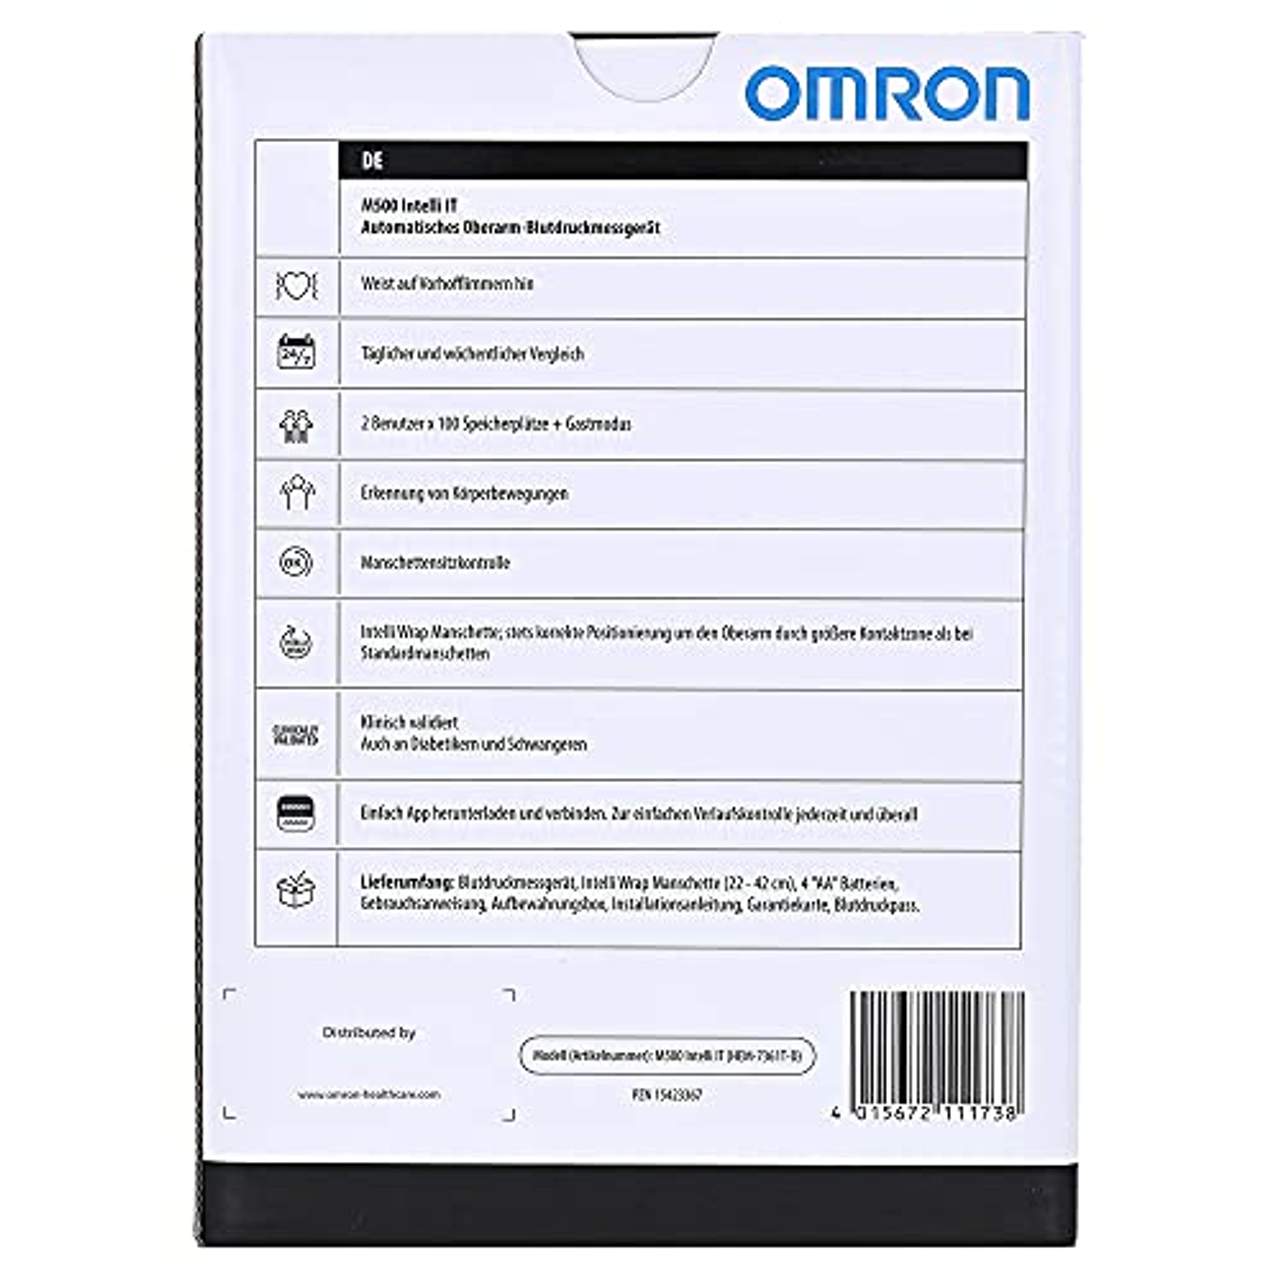 Omron M500 Intelli IT Speicher 2x100